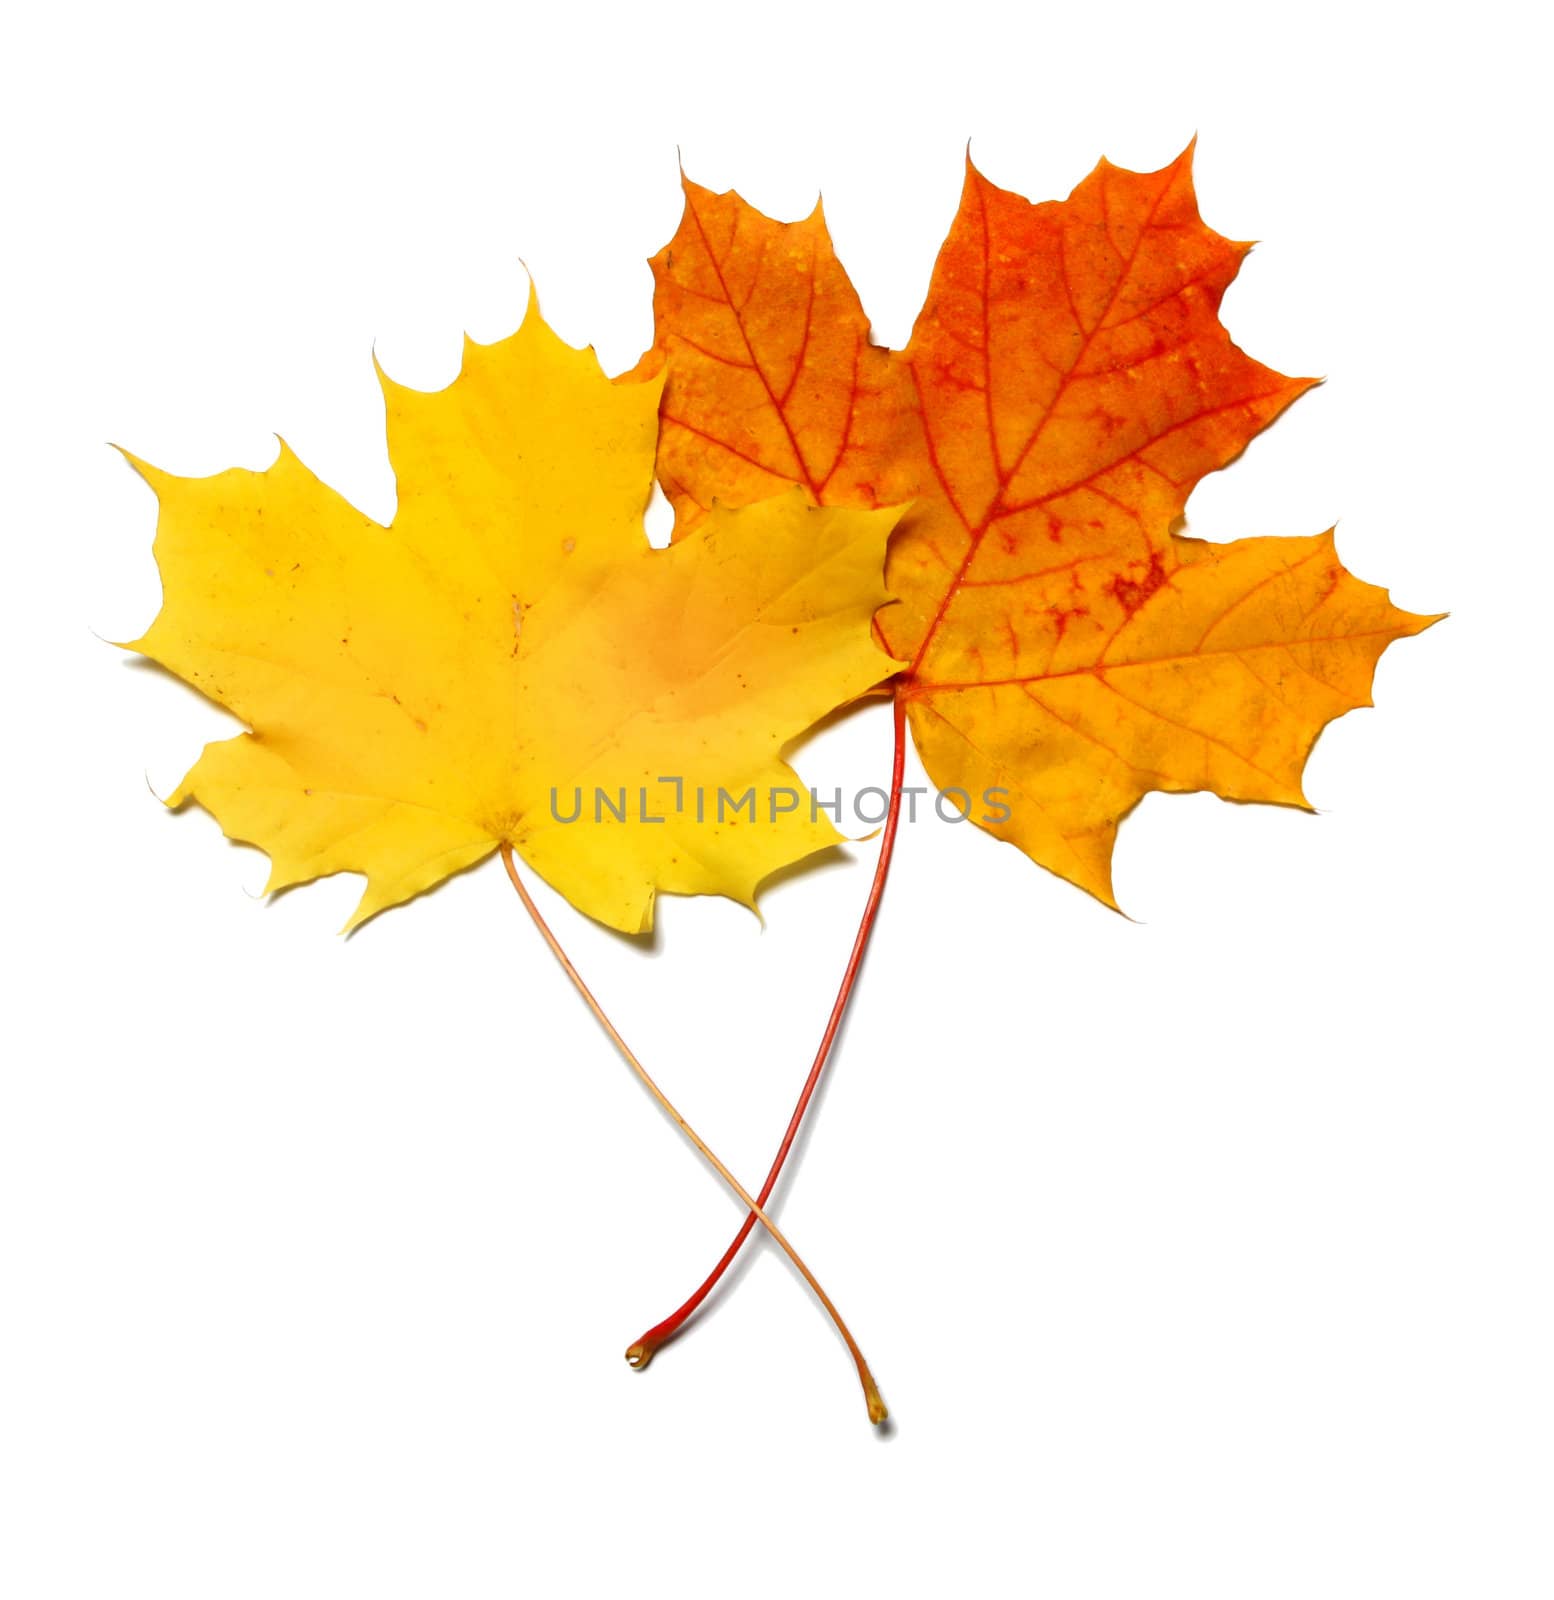 Yelllow and orange maple leaf by anterovium